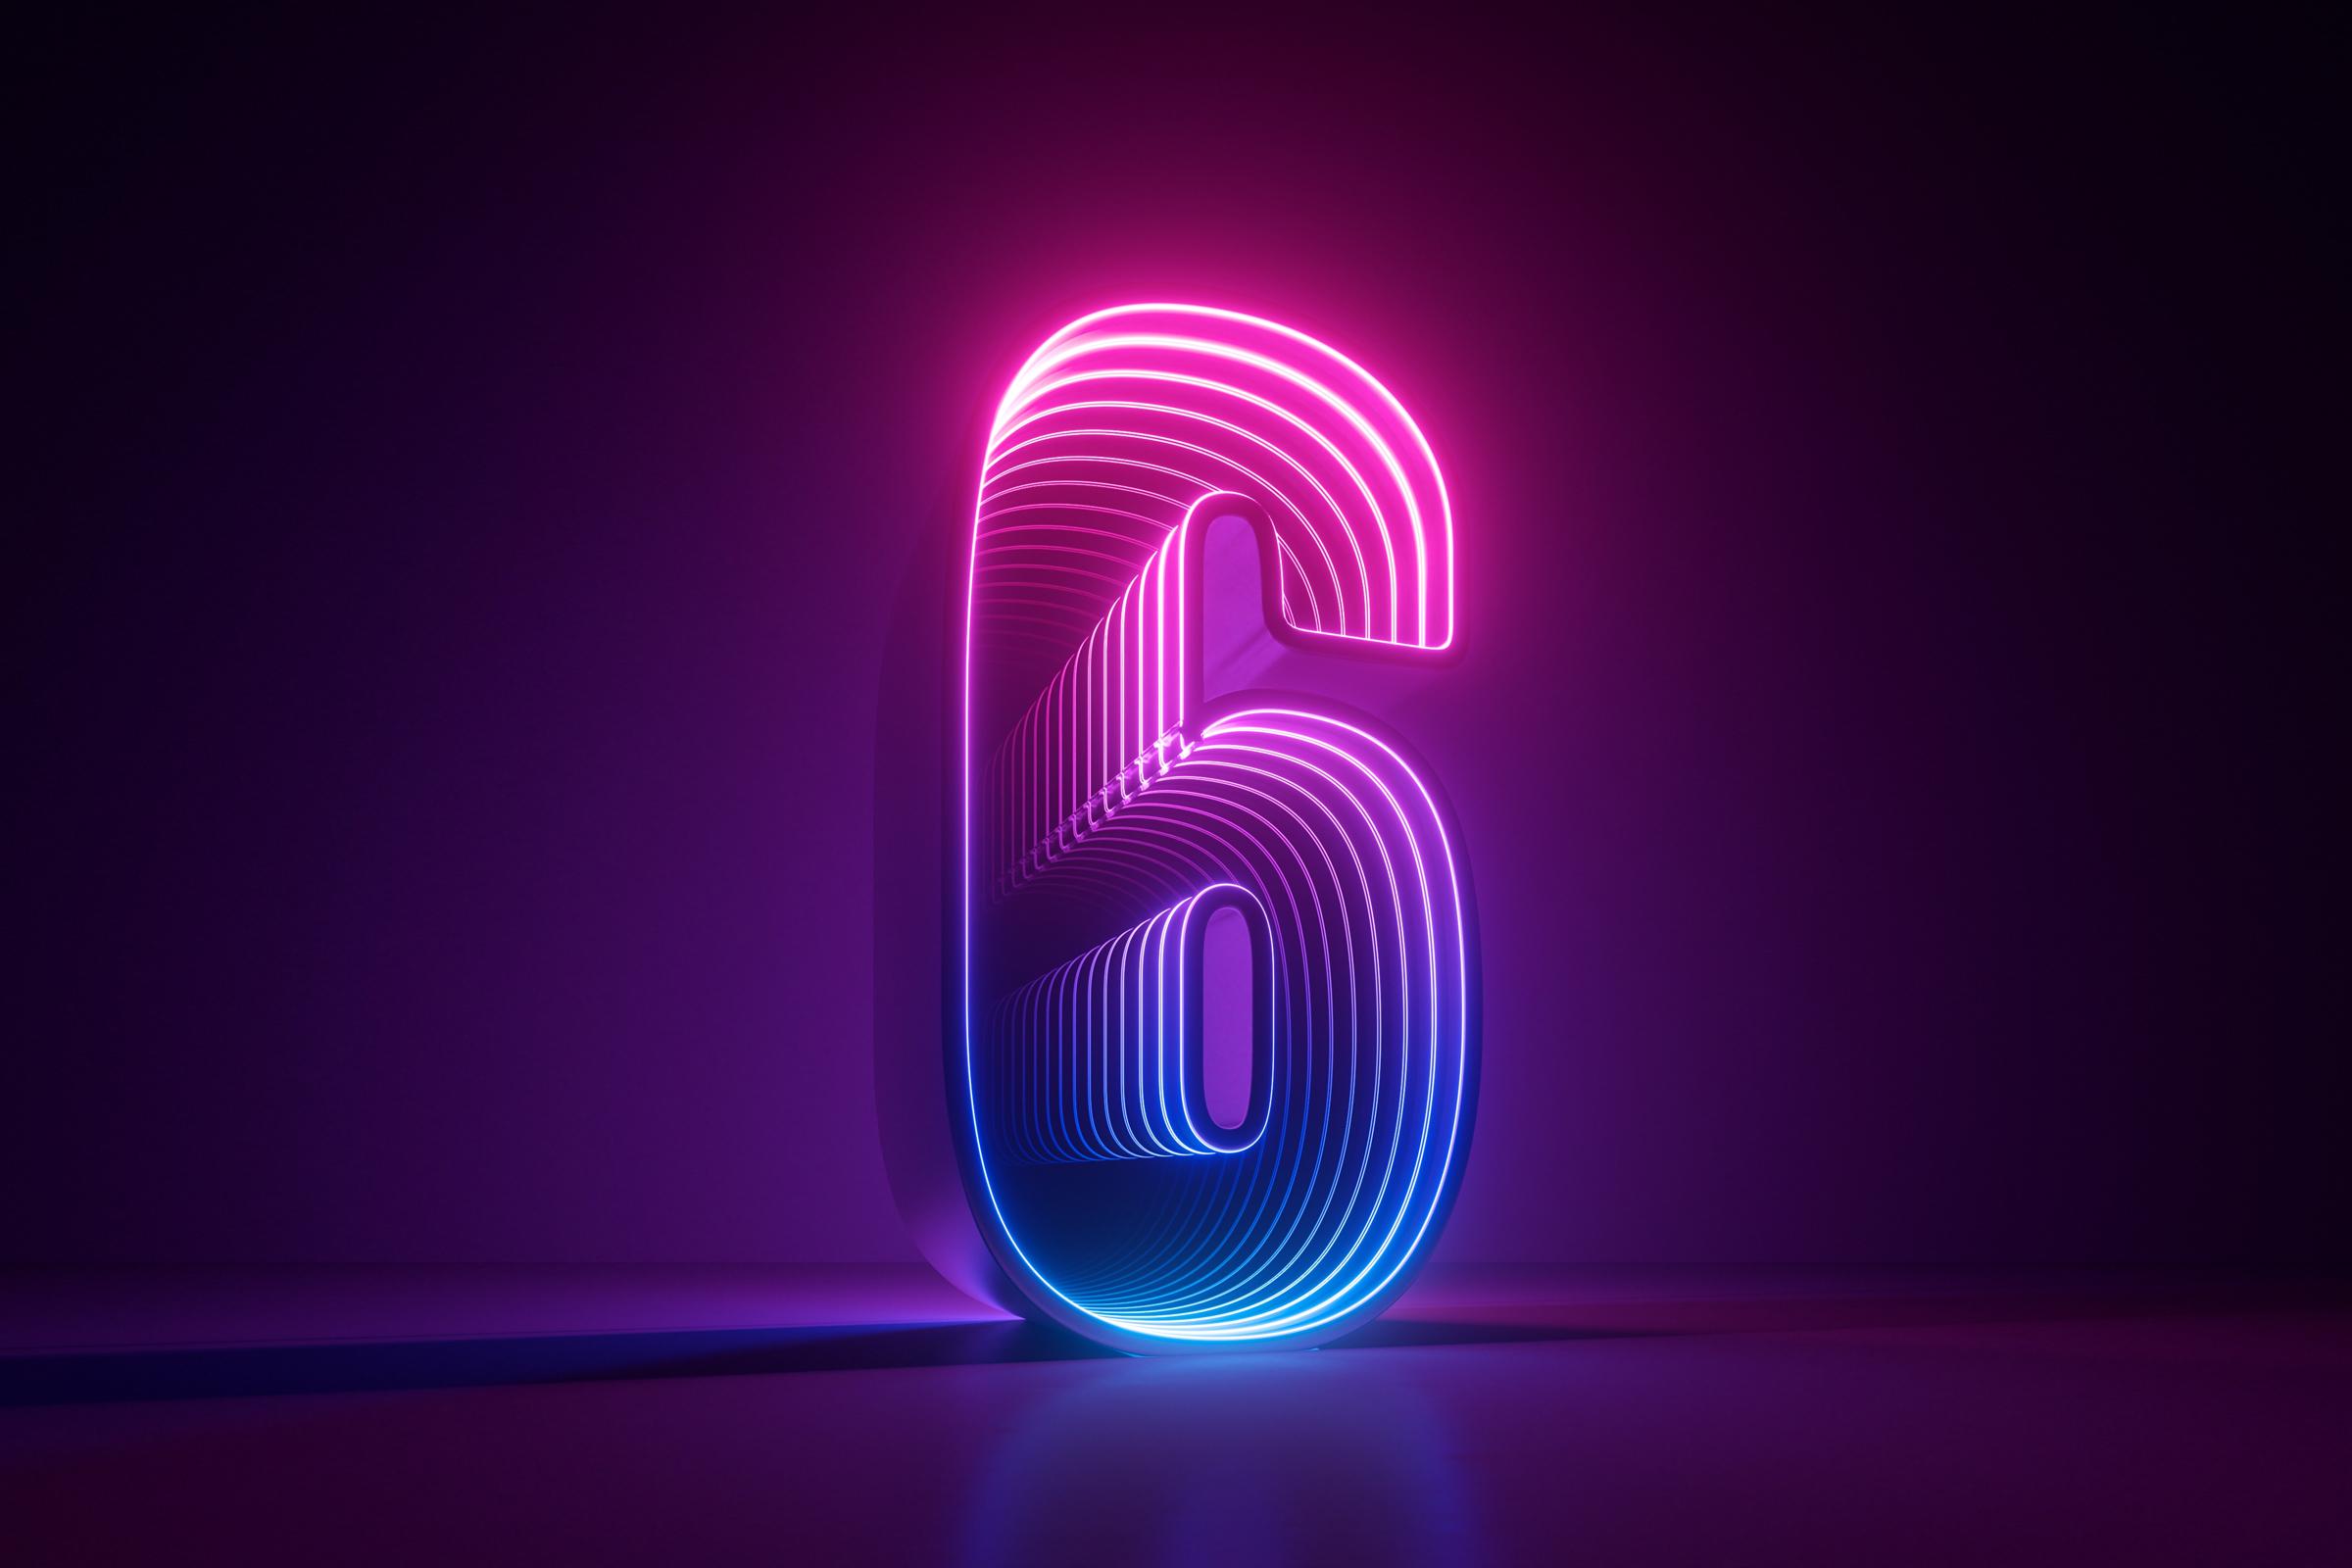 the number 6 in neon lighting